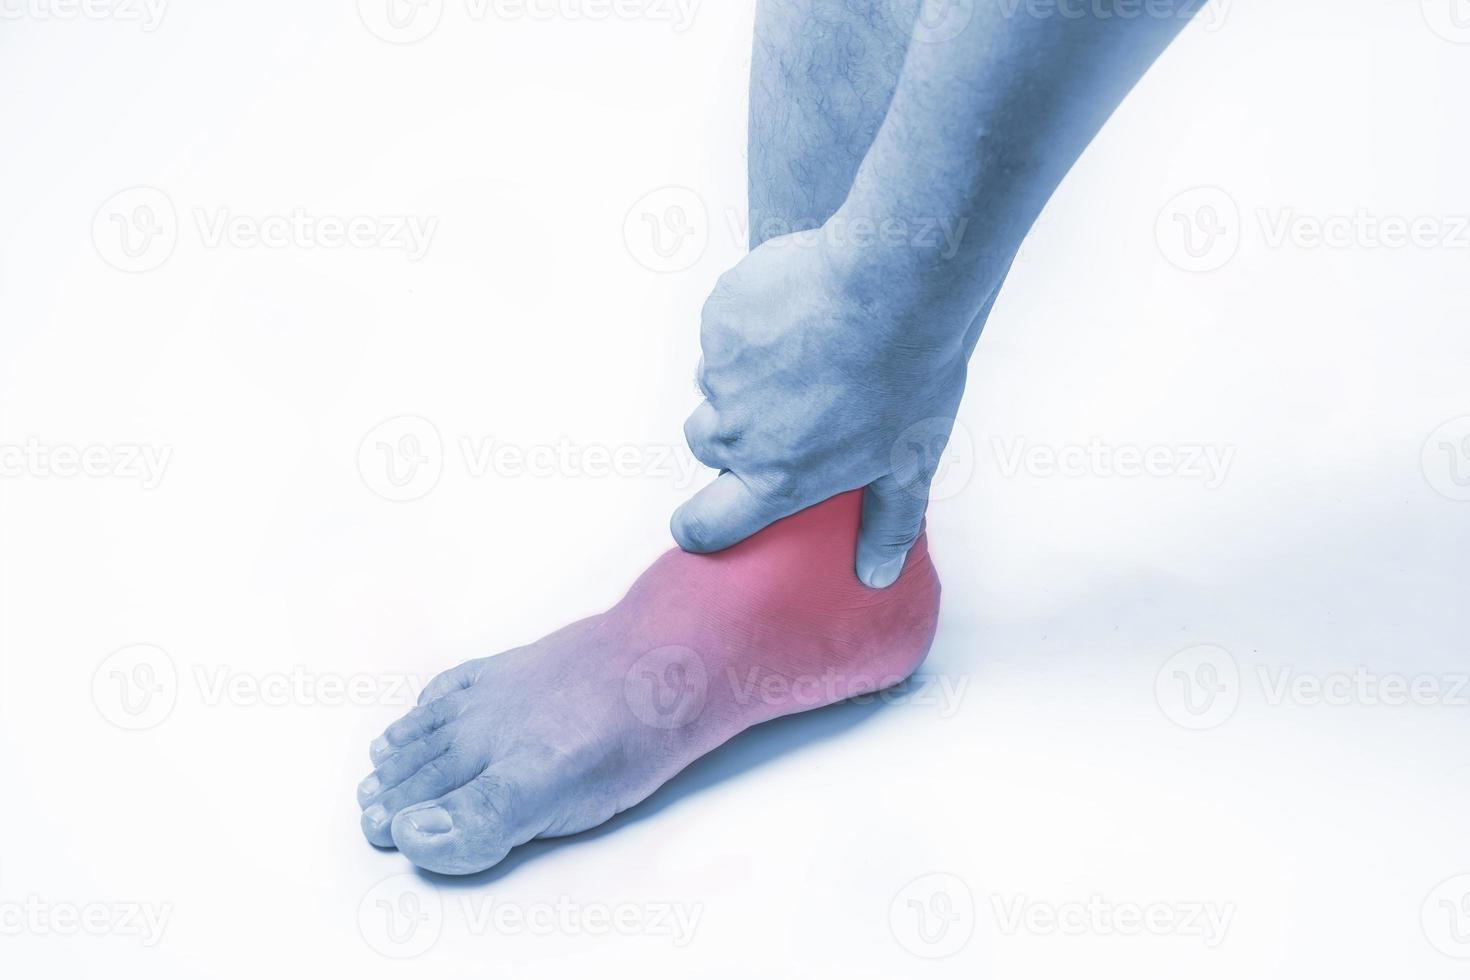 Knöchelverletzung beim Menschen. Knöchelschmerzen, Gelenkschmerzen Menschen medizinisch, einfarbiges Highlight am Knöchel foto